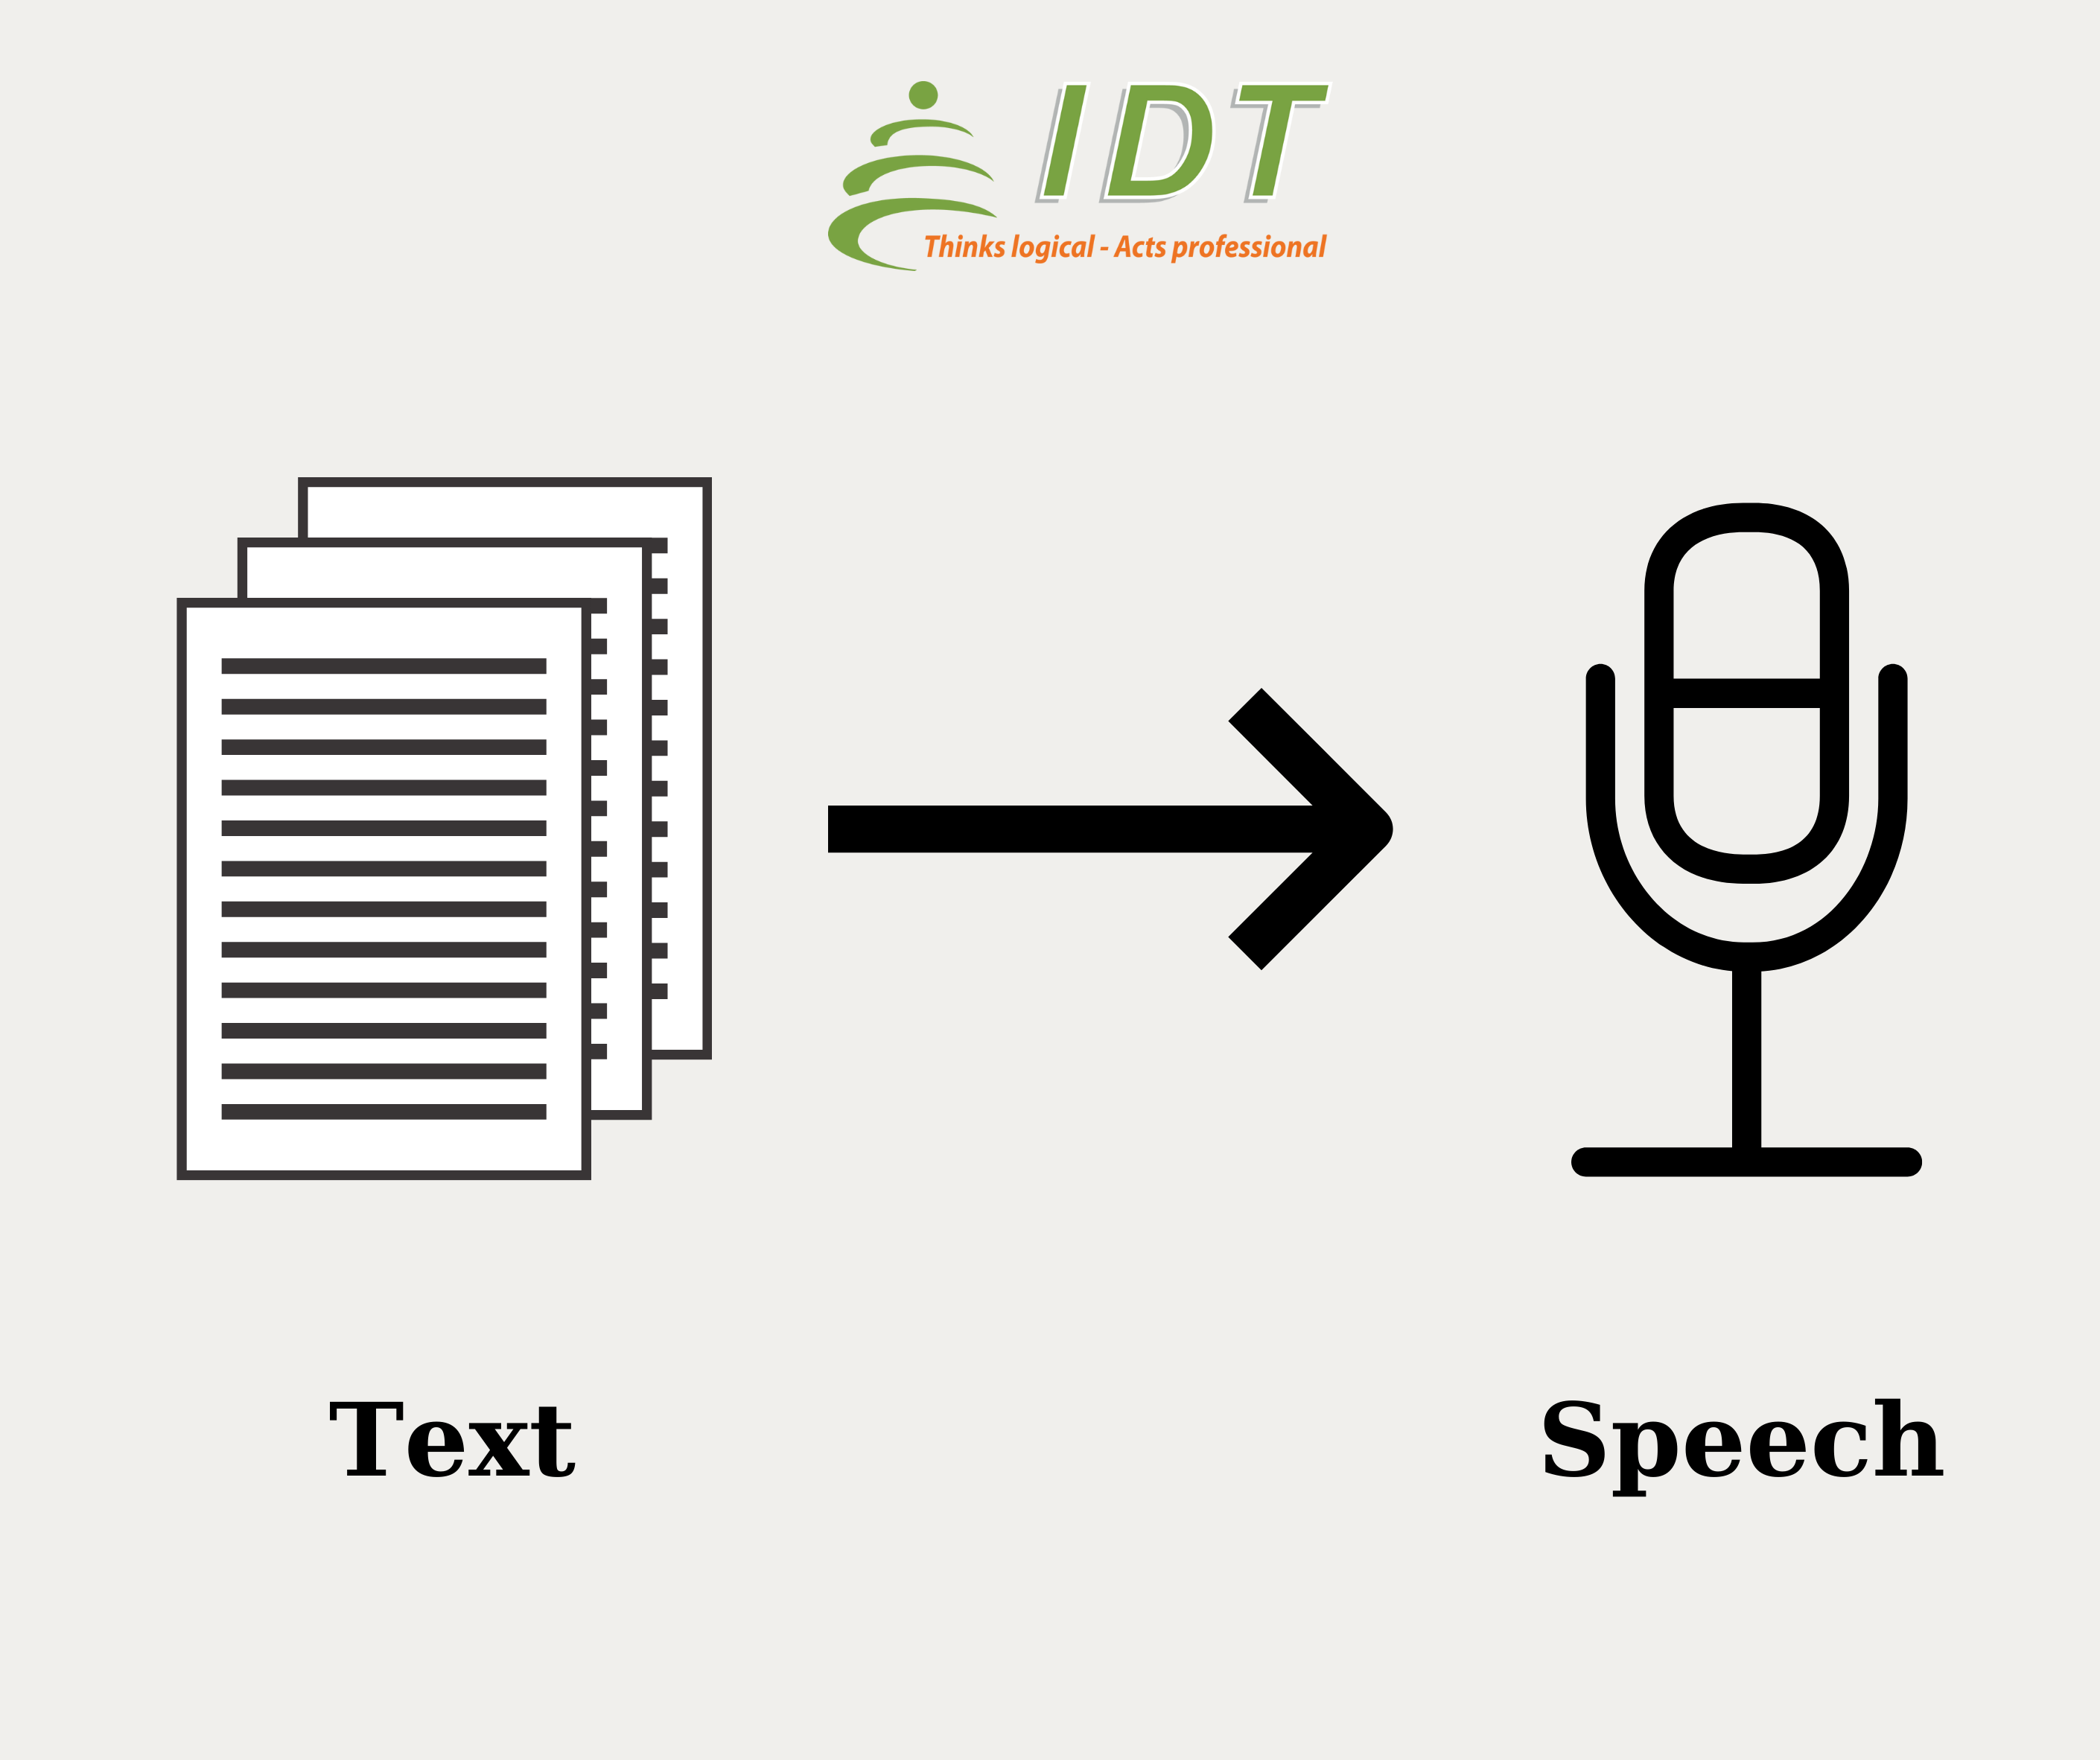 windows 10 text to speech cortana voice